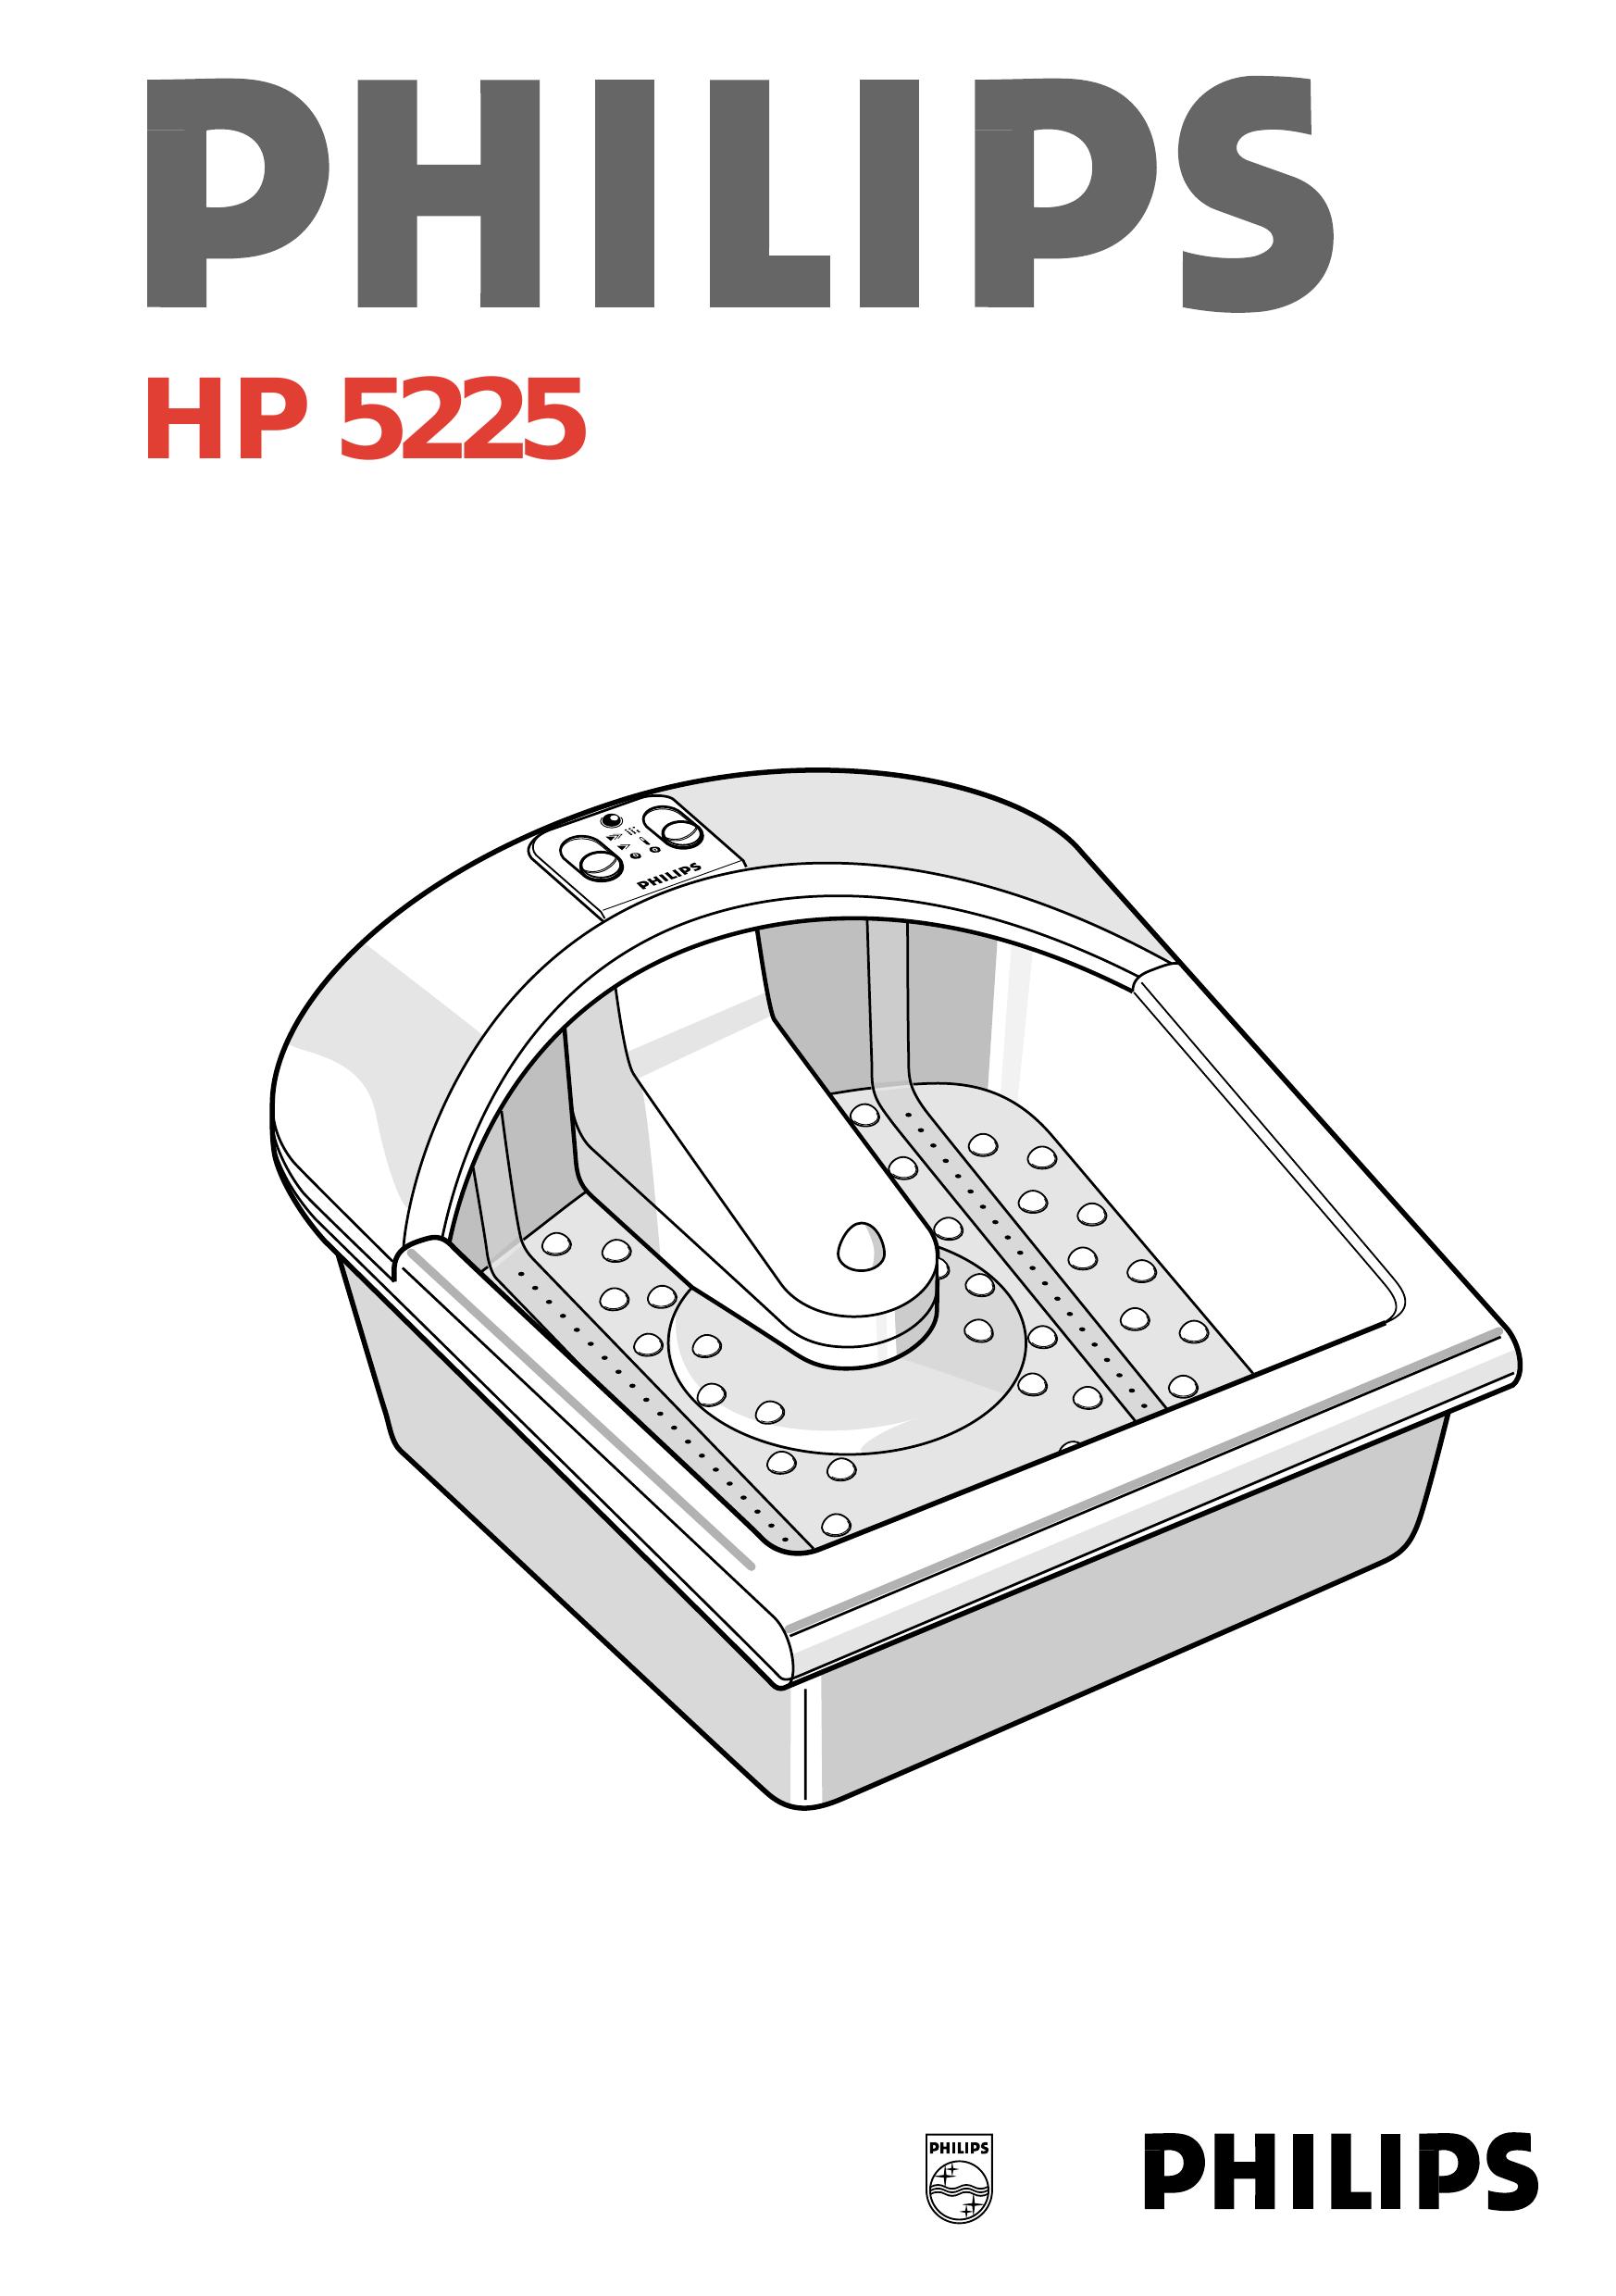 Philips HP 5225 Pedicure Spa User Manual